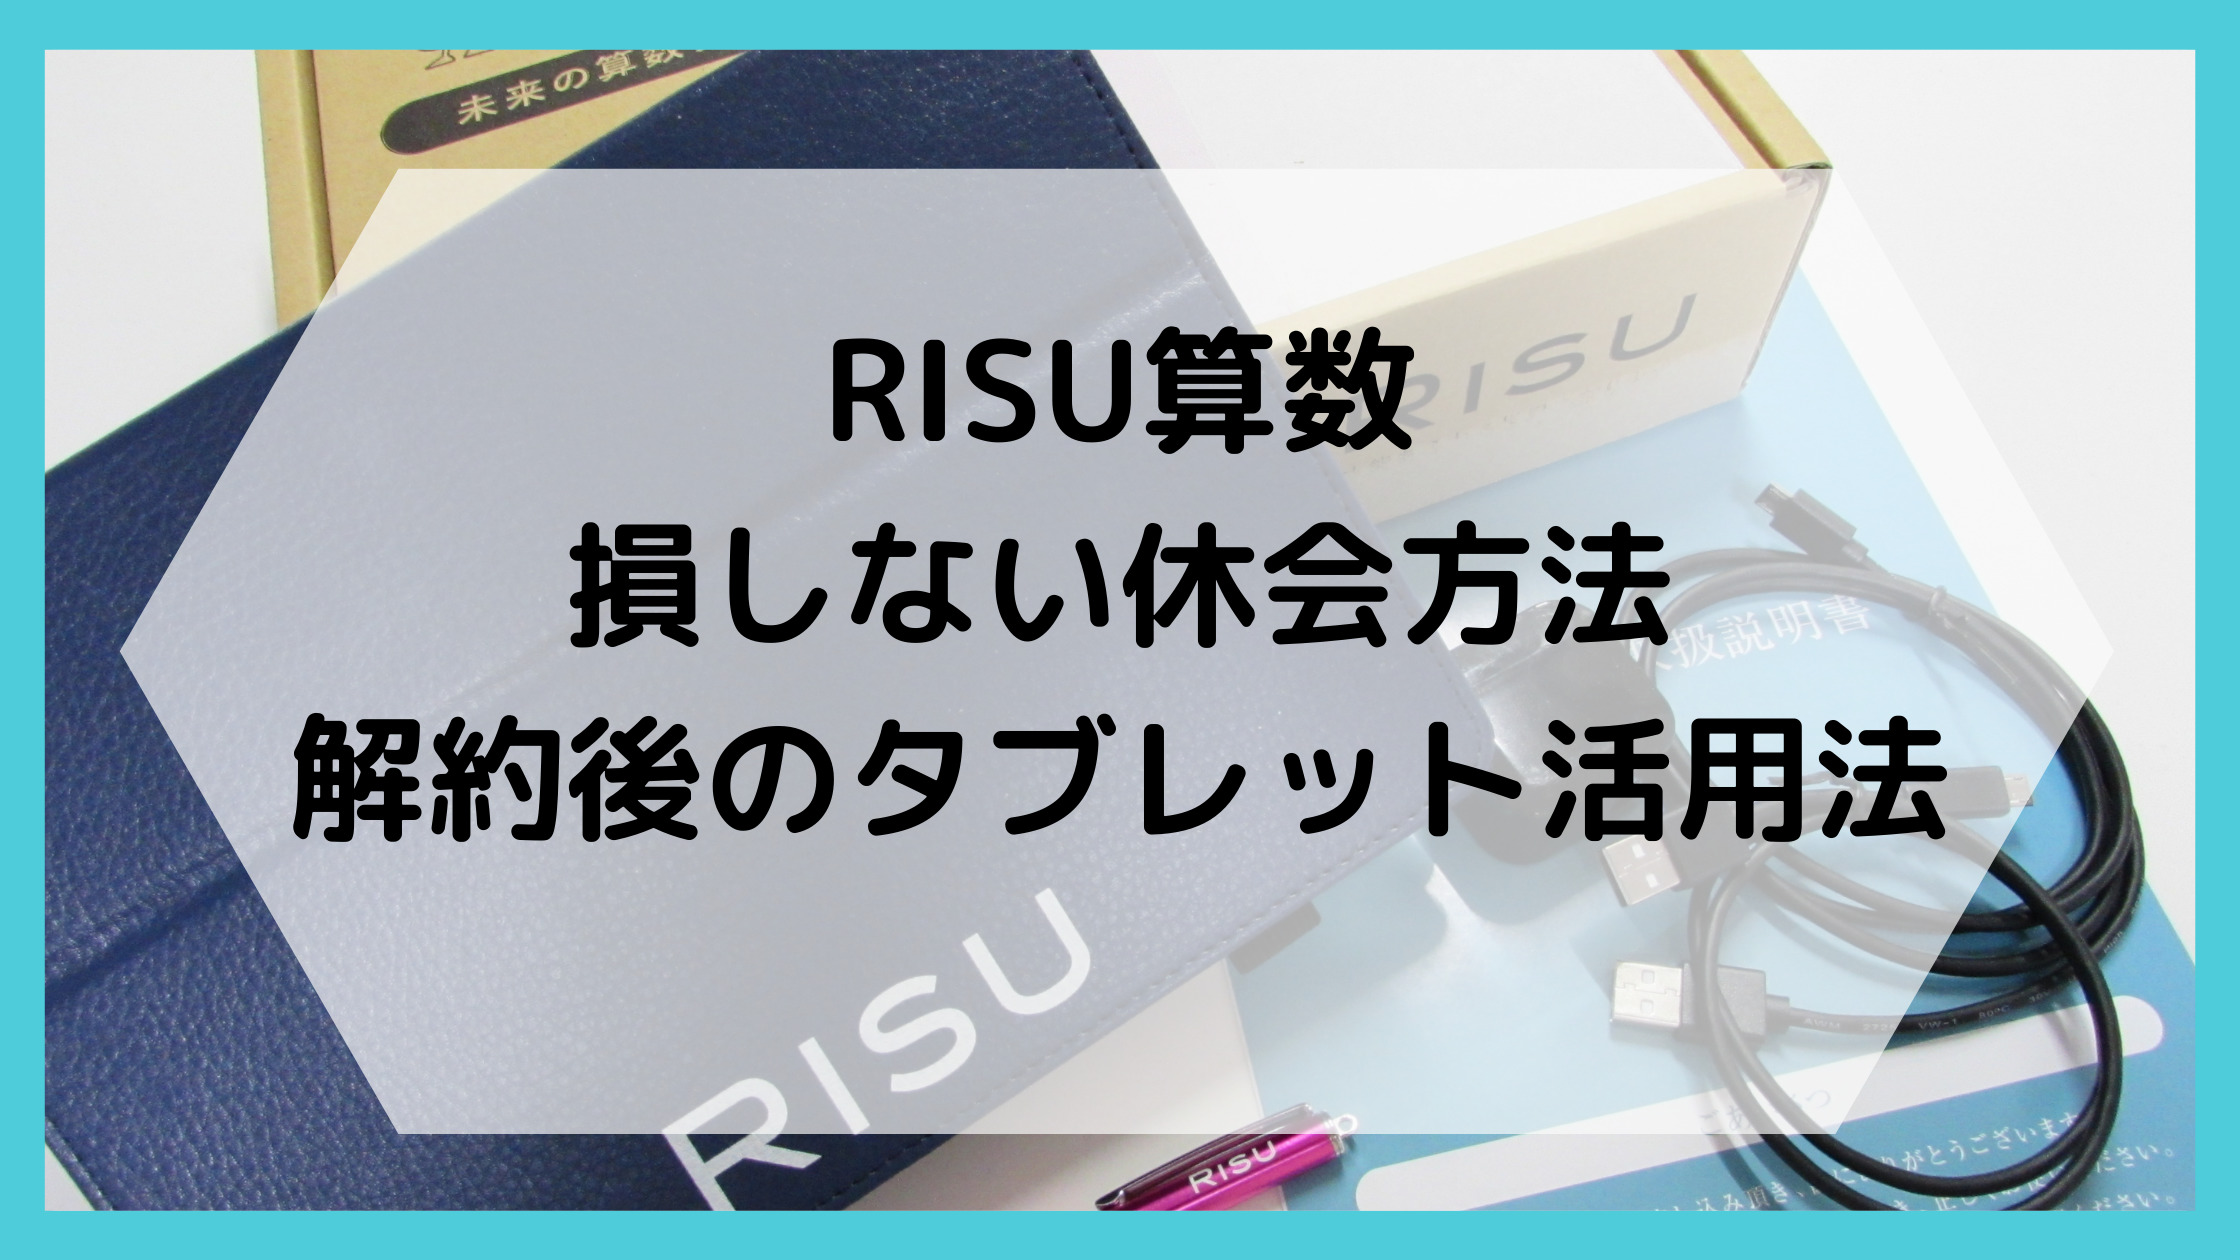 RISU算数の損しない休会方法と解約後のタブレット活用法！ | なまくら 